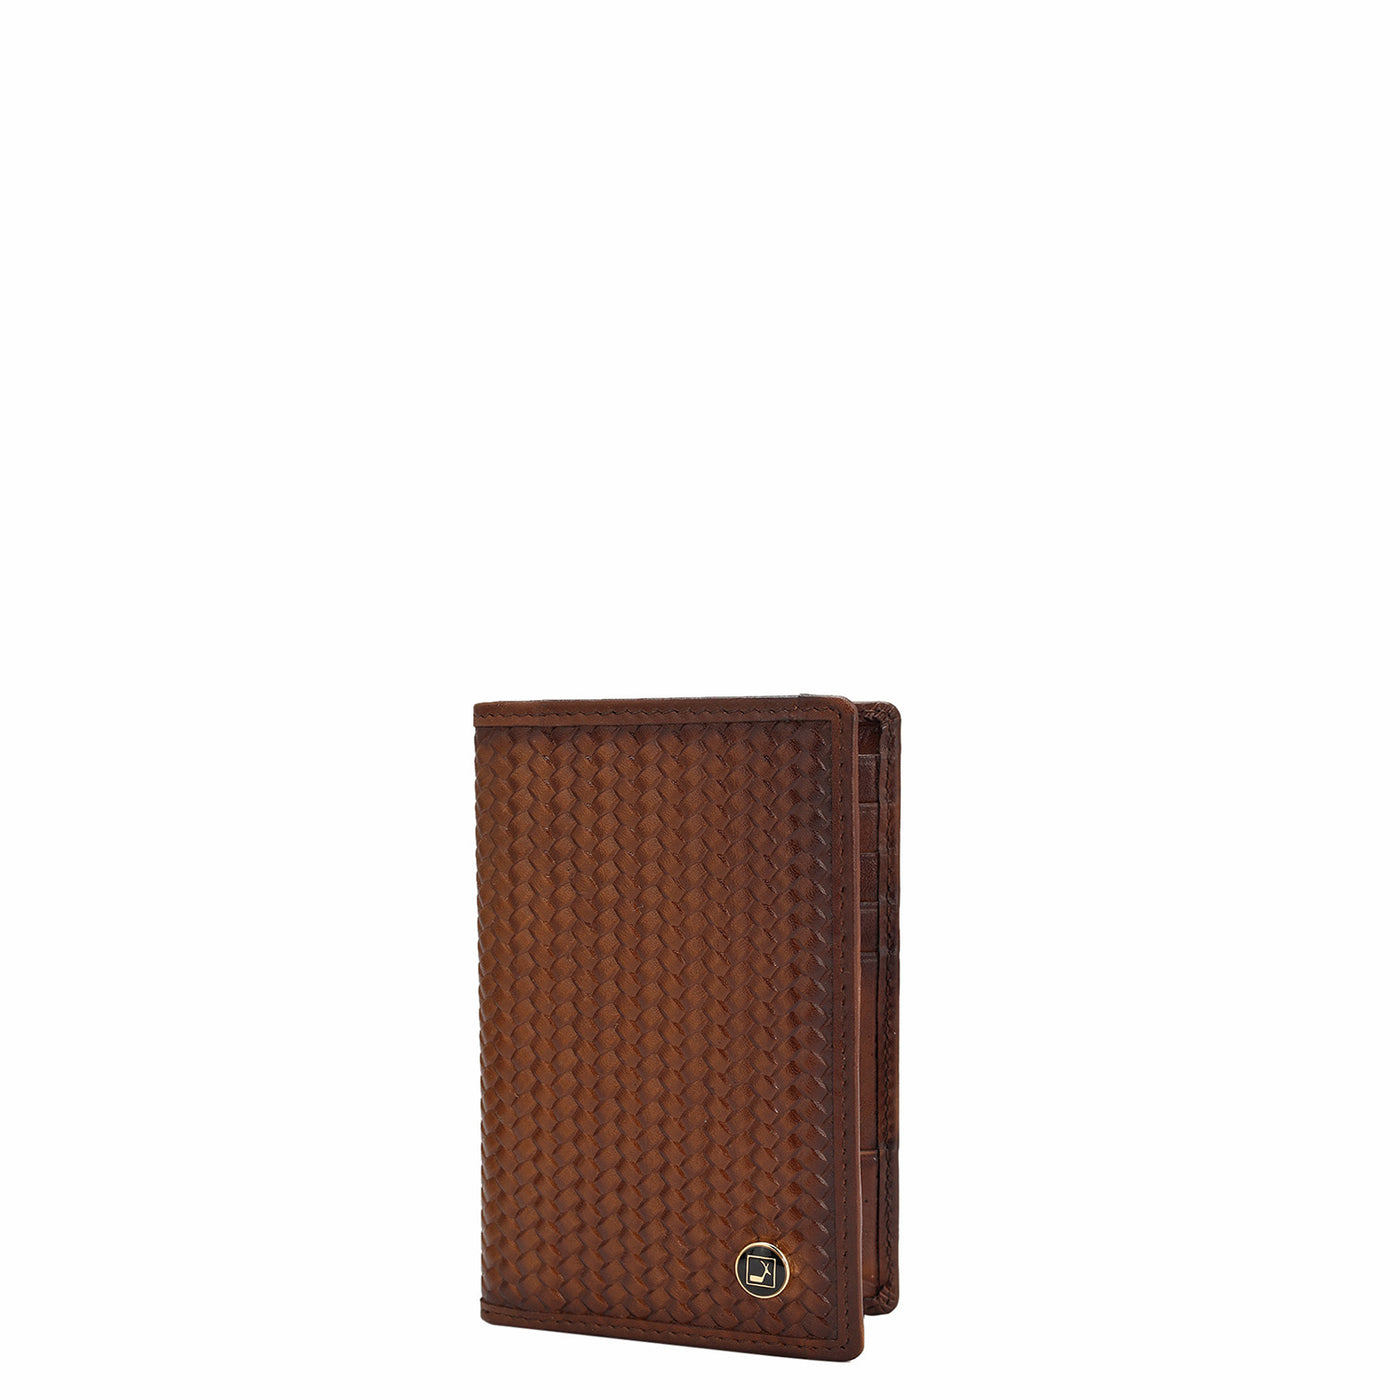 Mat Emboss Leather Card Case - Cognac